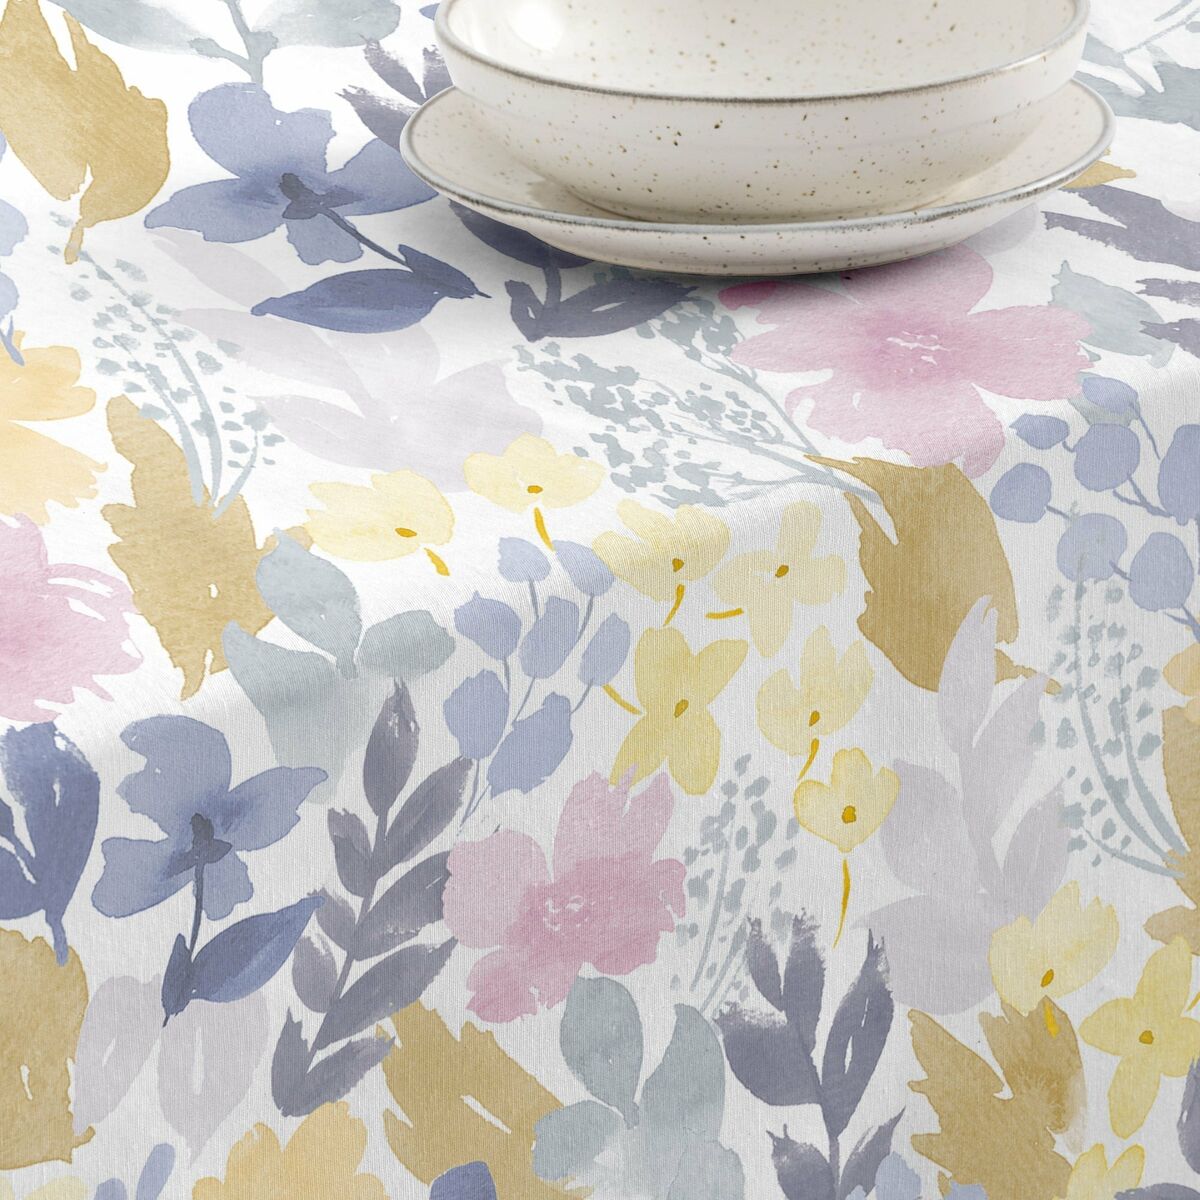 Stain-proof tablecloth Belum Gisborne 300 x 140 cm